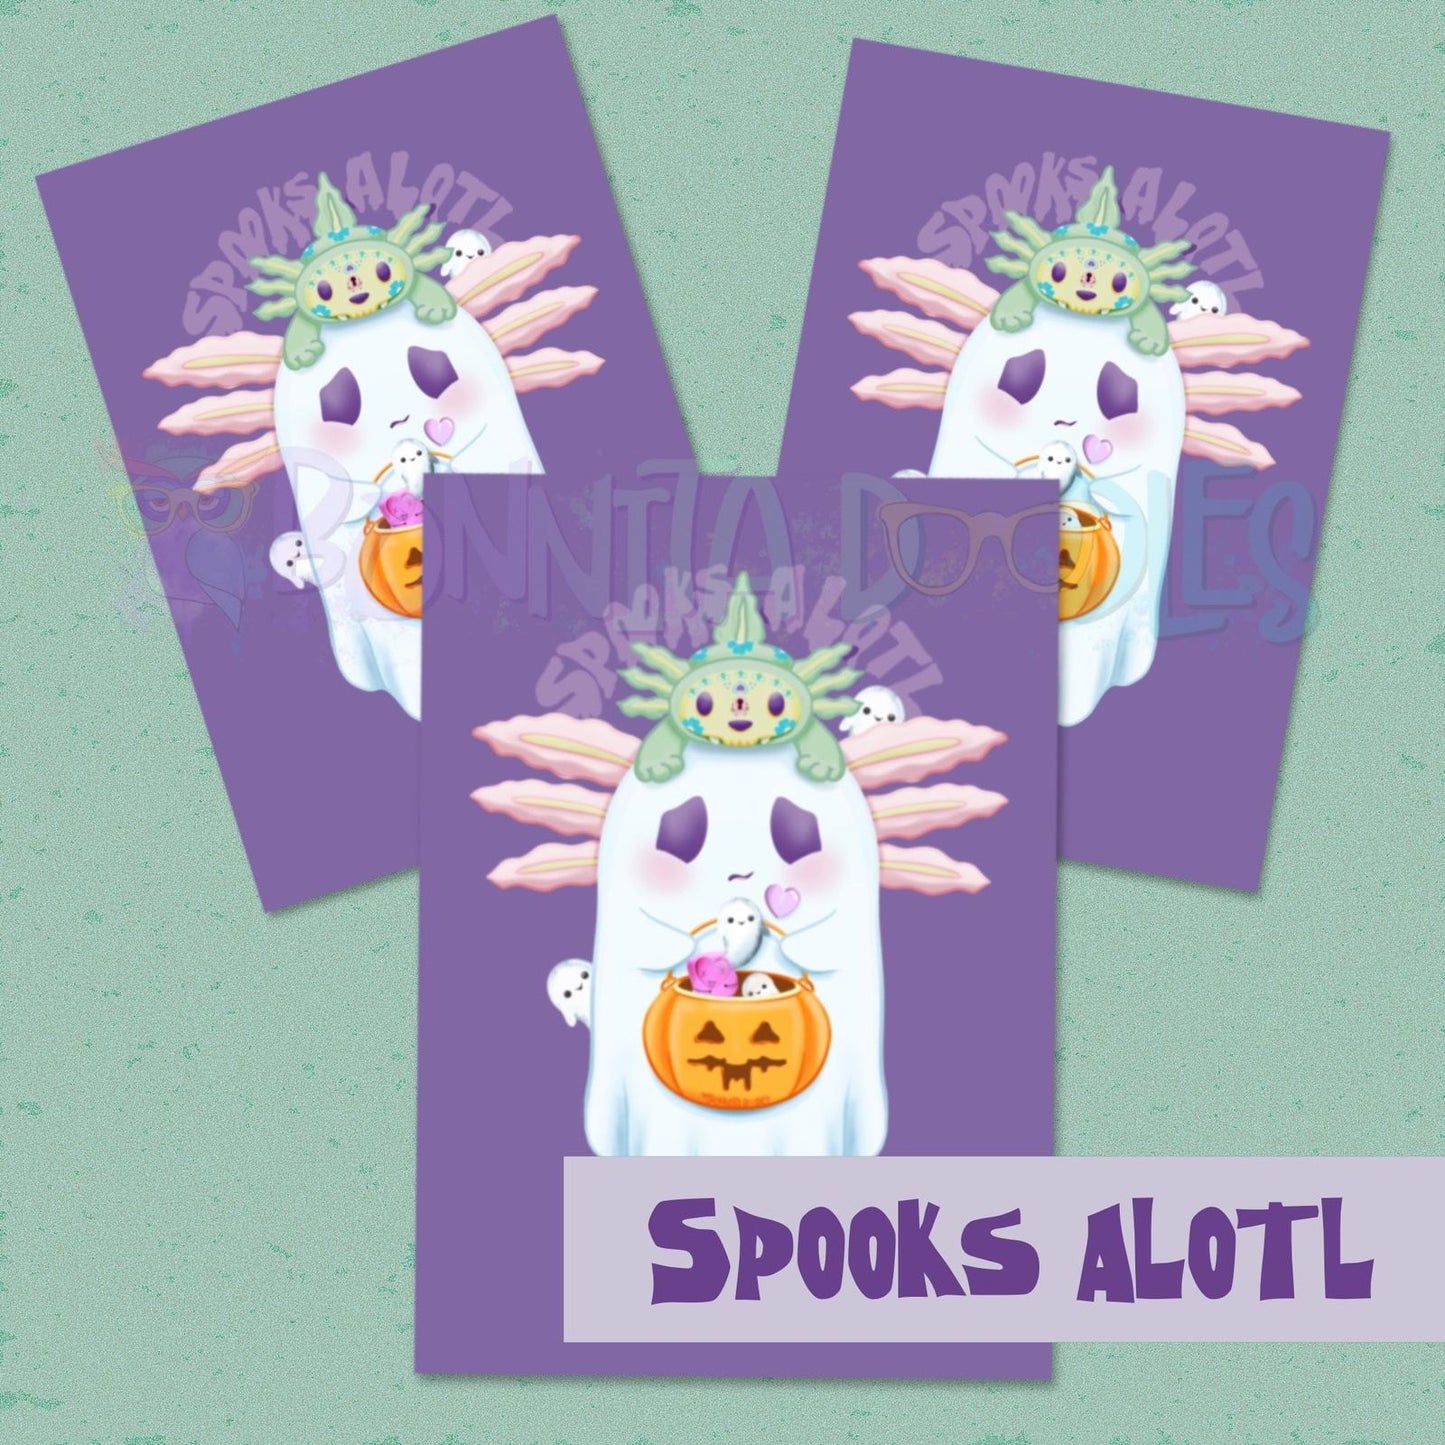 Spooks Alotl - trick or treat vinyl sticker / print